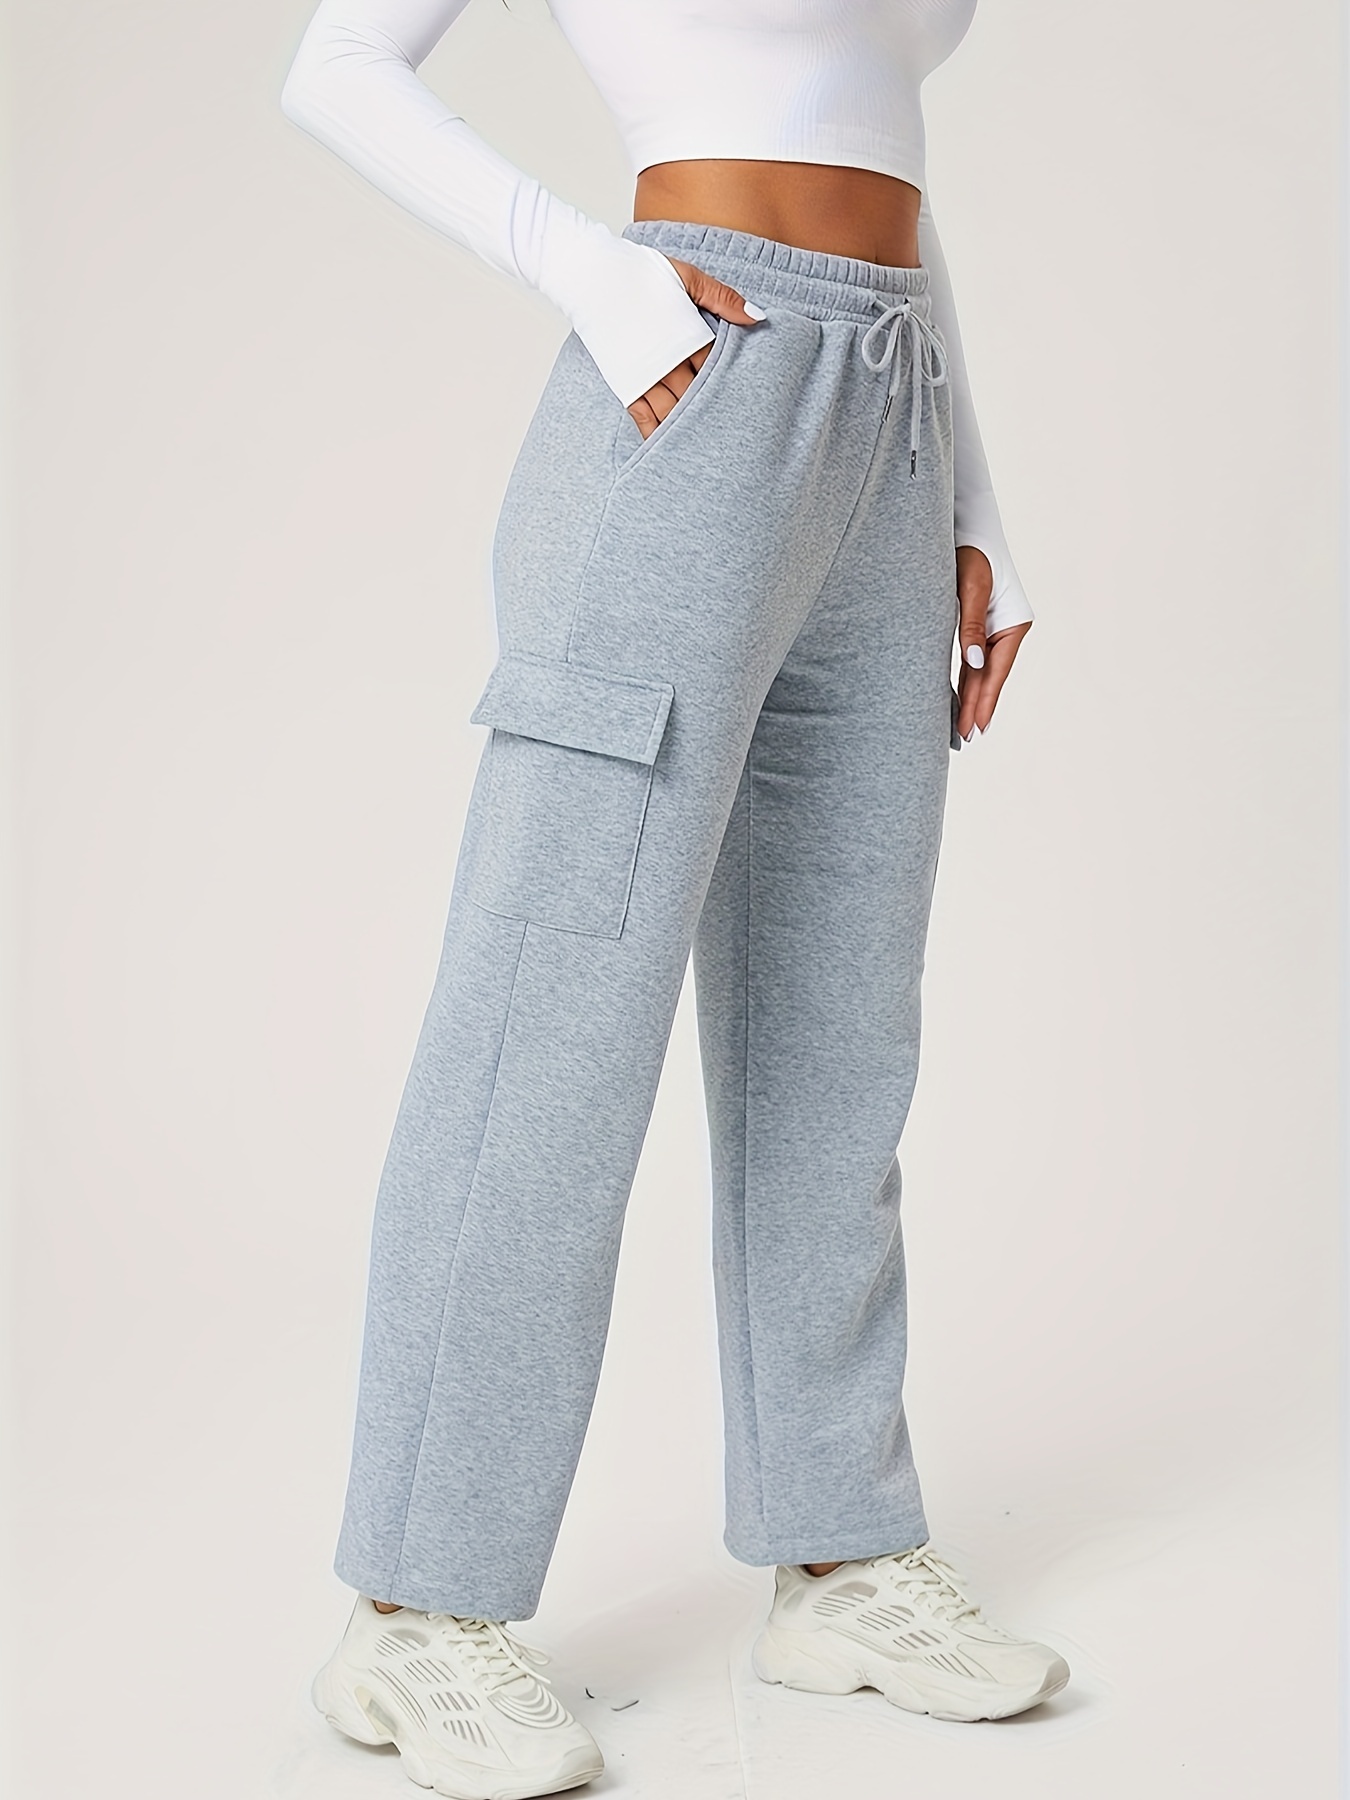  Jeans for Women Women's Pants Slant Pocket Jogger Jeans SUANQ  (Color : Light Grey, Size : Large) : Clothing, Shoes & Jewelry